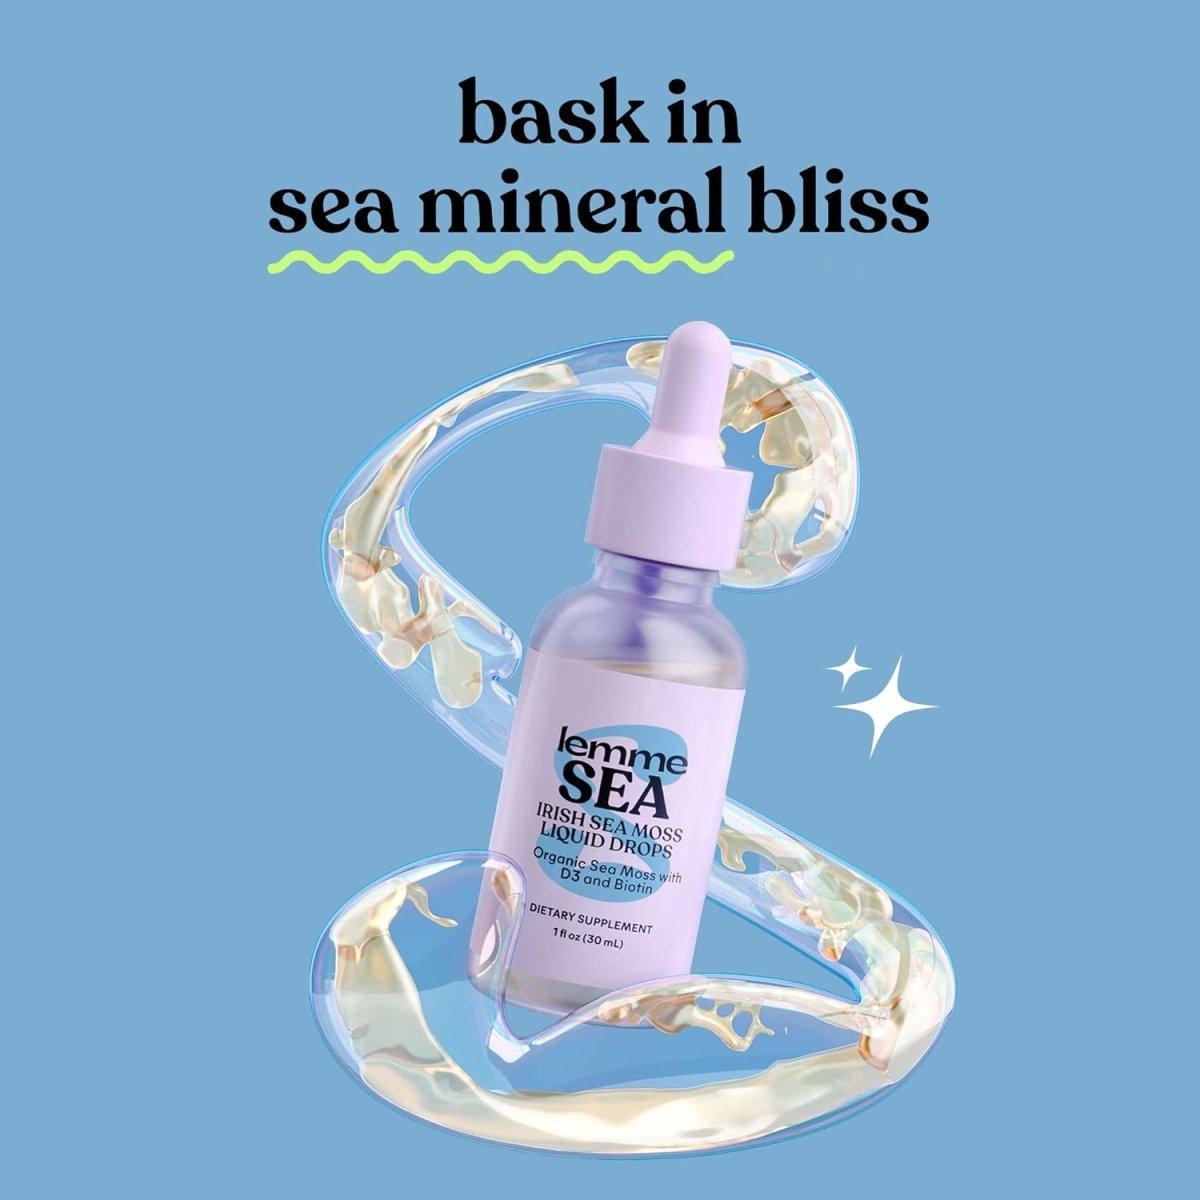 Irish Sea Moss Organic Liquid Drops - 30ml (30 Servings) - Glam Global UK